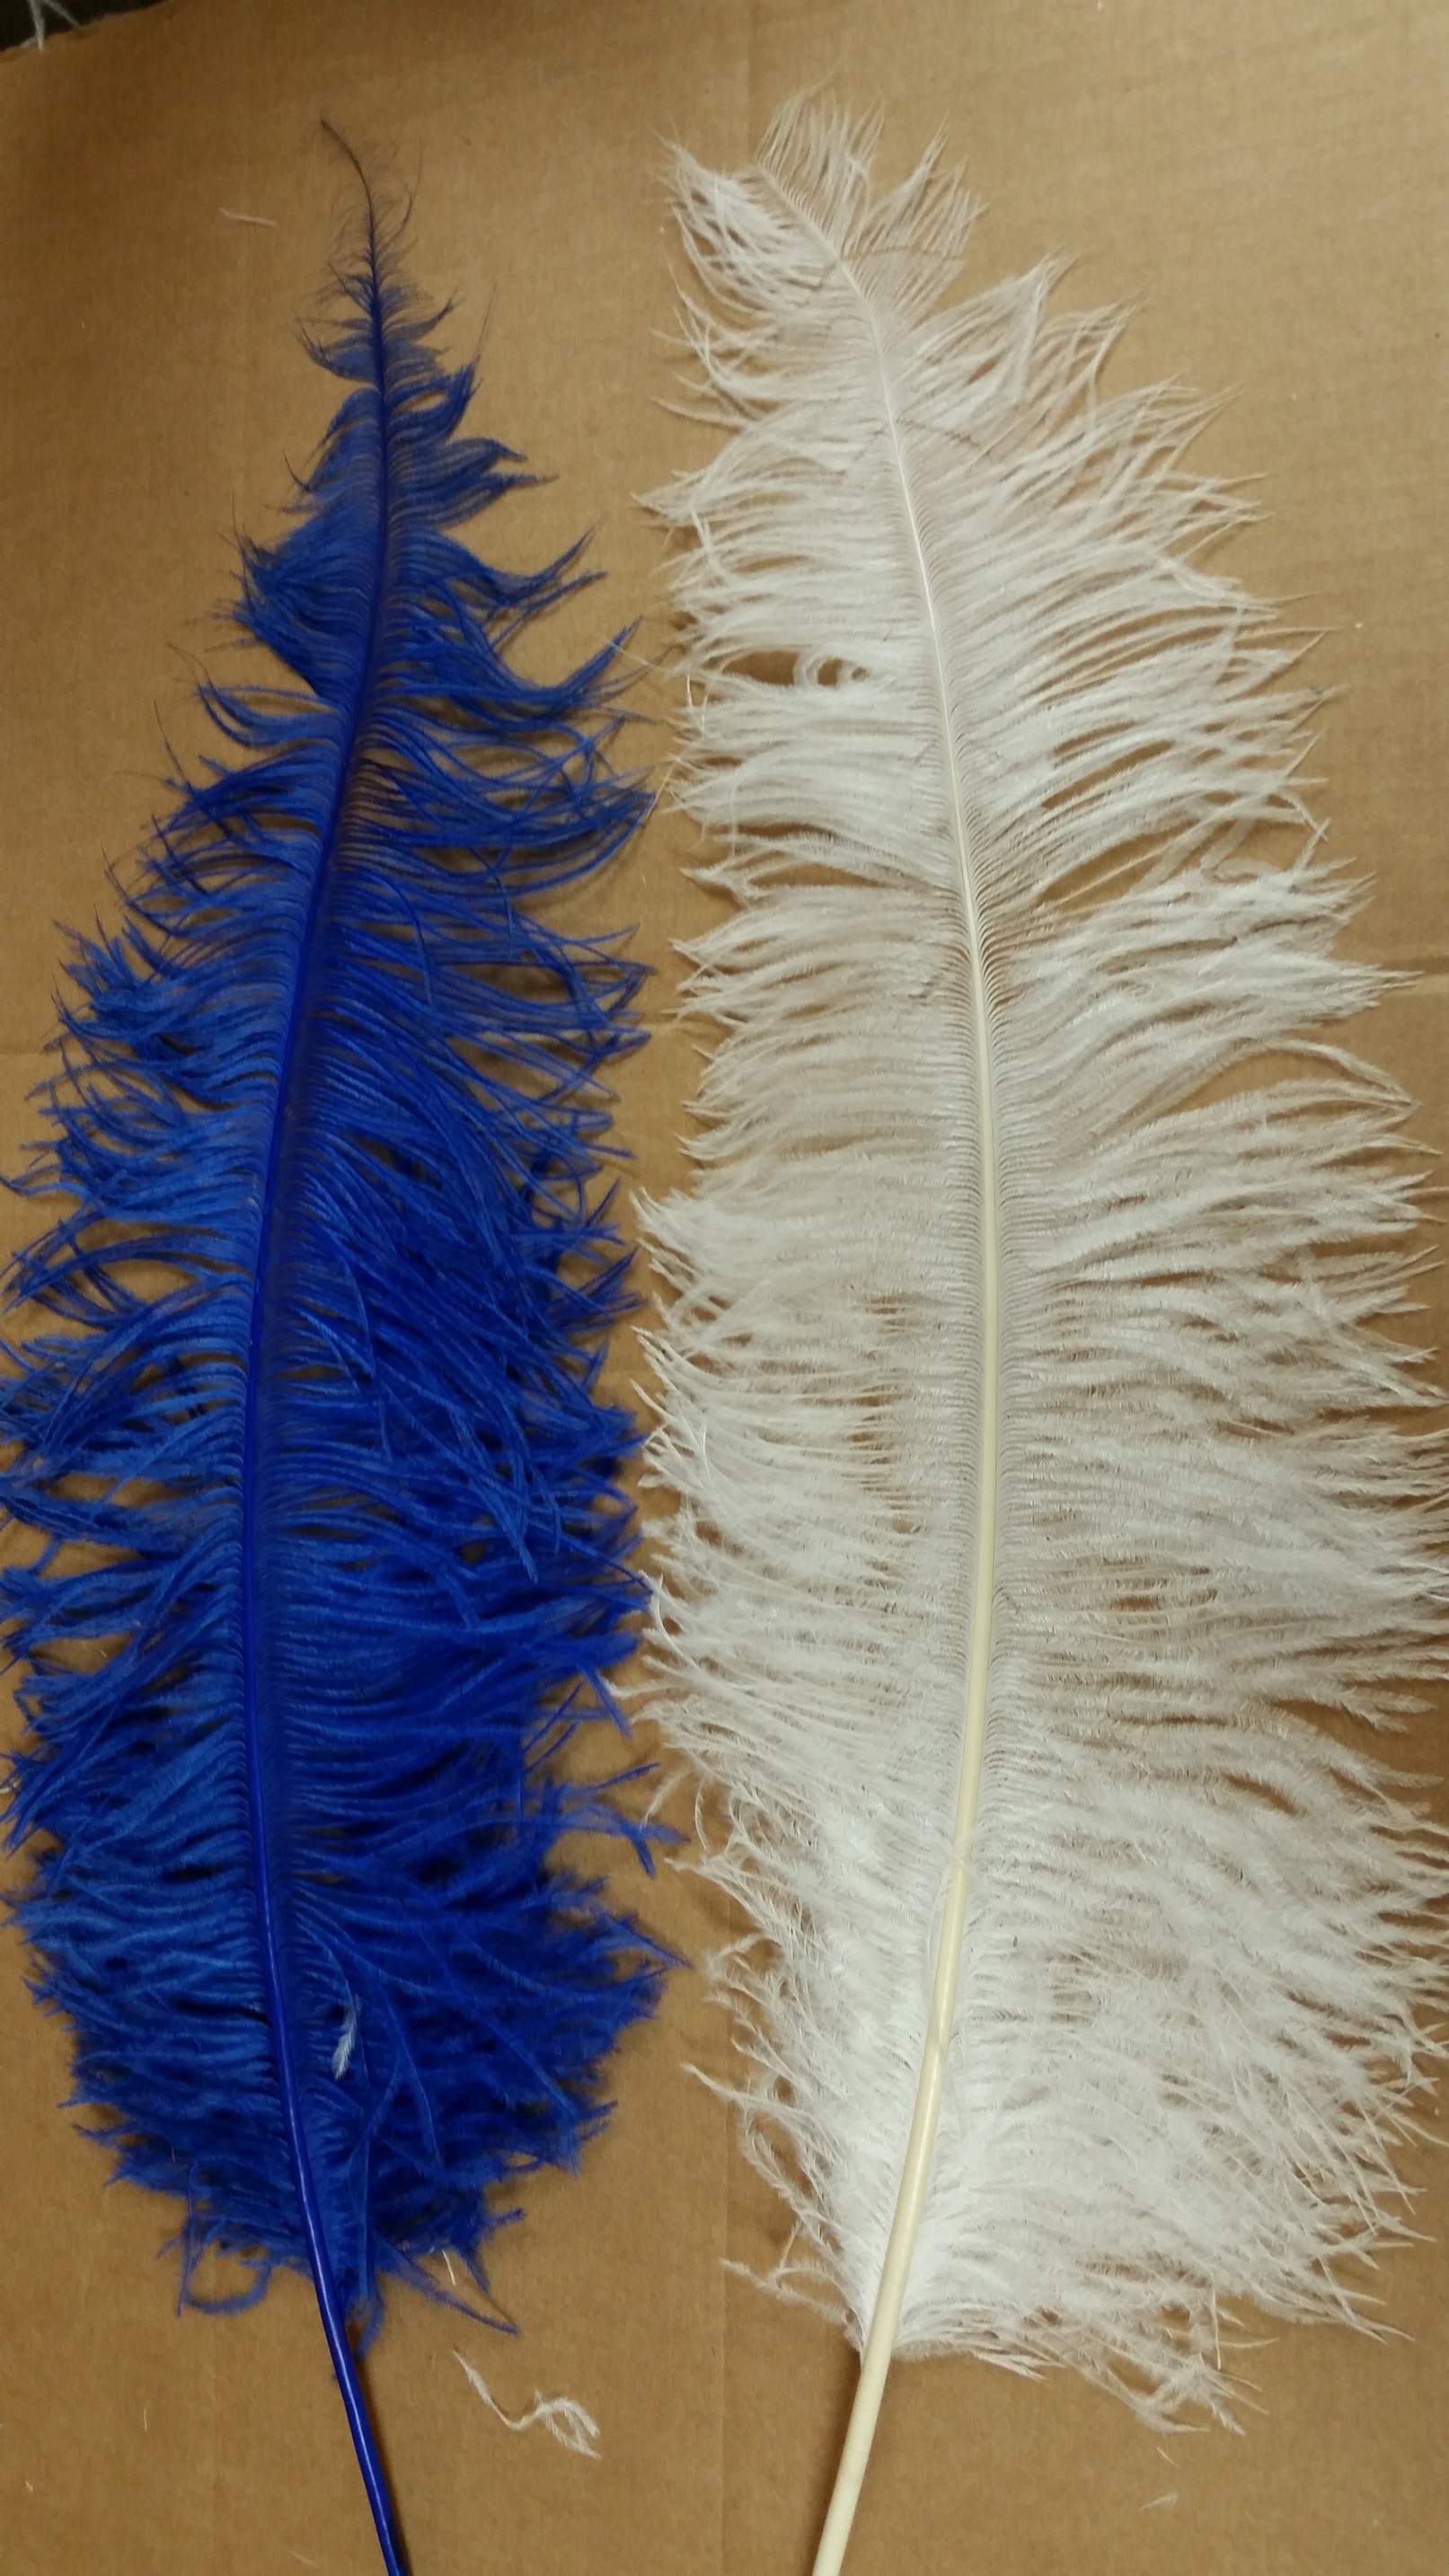 Black Natural Plume Ostrich Feathers Centerpiece - 24-26